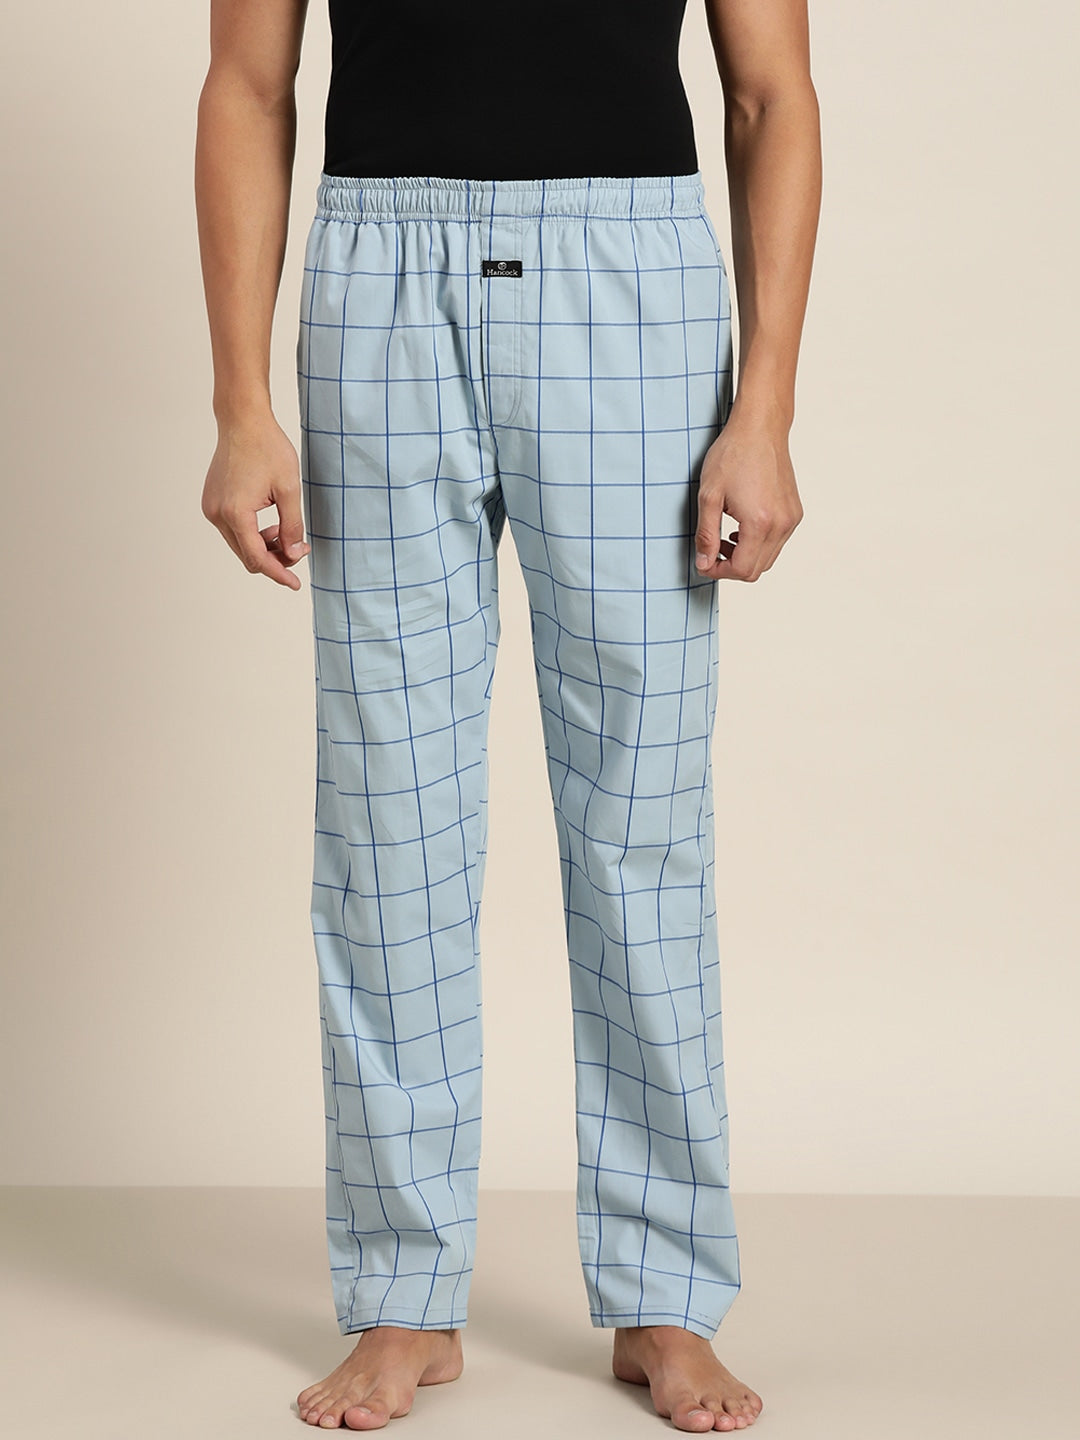 Men's Lounge Pants Pack of 2| Black & Brown Stripes | Fits Waist Size 28